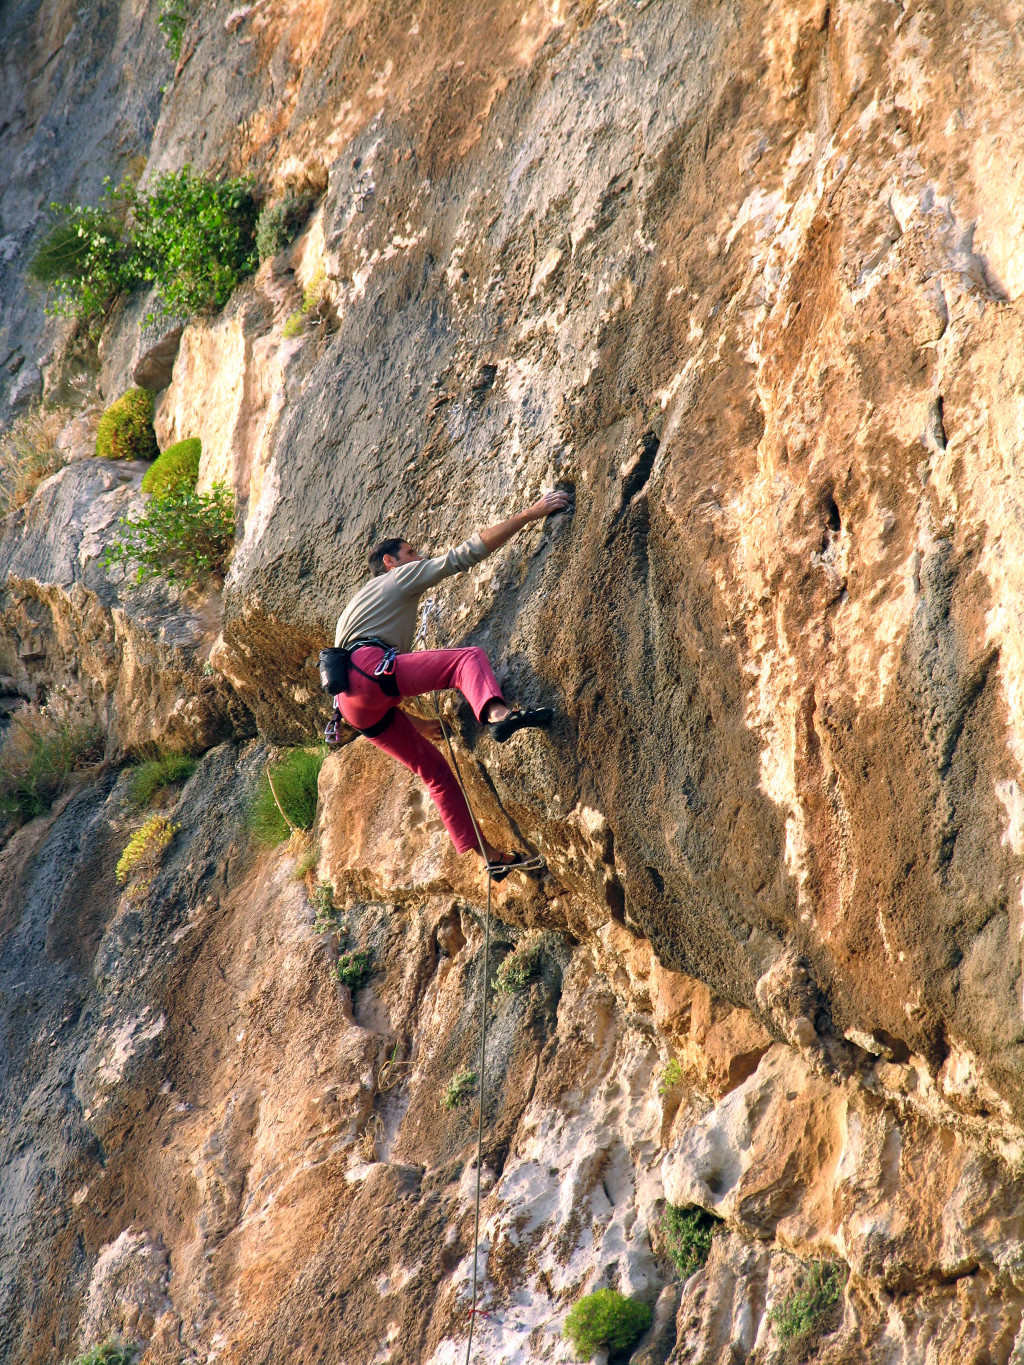 Yiannis Torelli on "A Muerte" 6c+, Varasova. Photo: Aris Theodoropoulos/Climb Greece